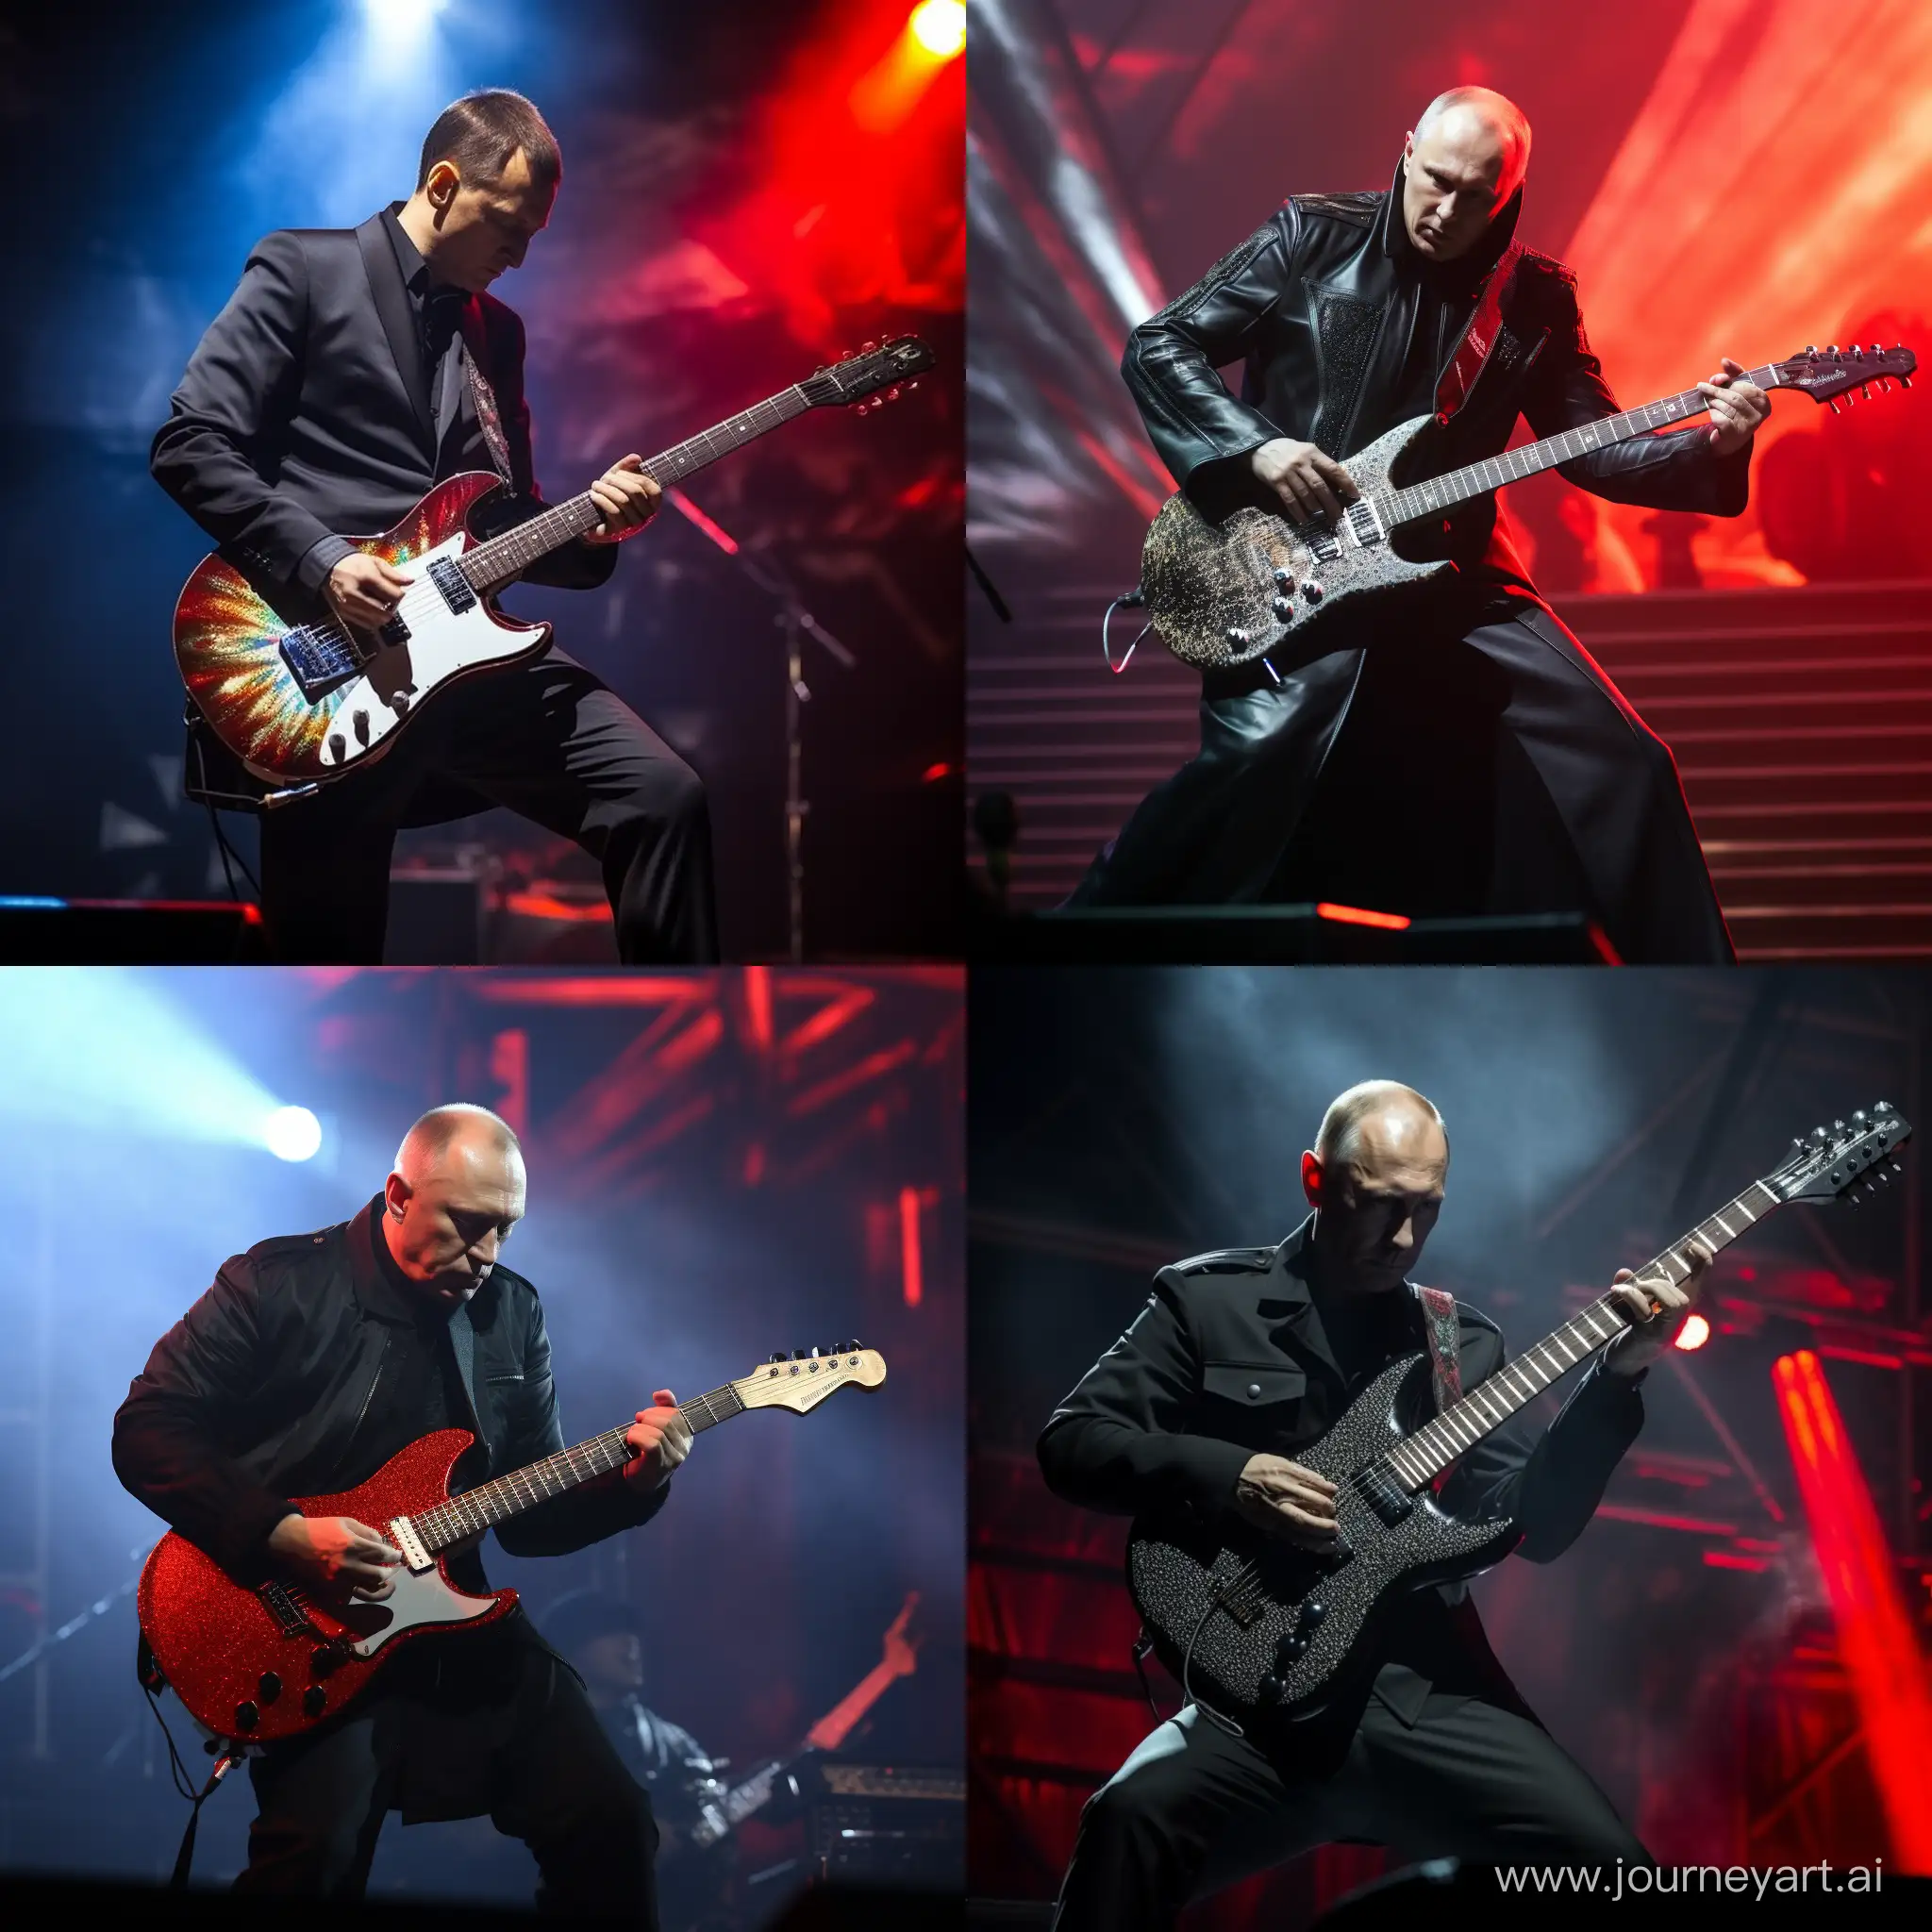 Vladimir-Putin-Rockstar-Guitar-Performance-Electrifying-Stage-Presence-Captured-in-Real-Photo